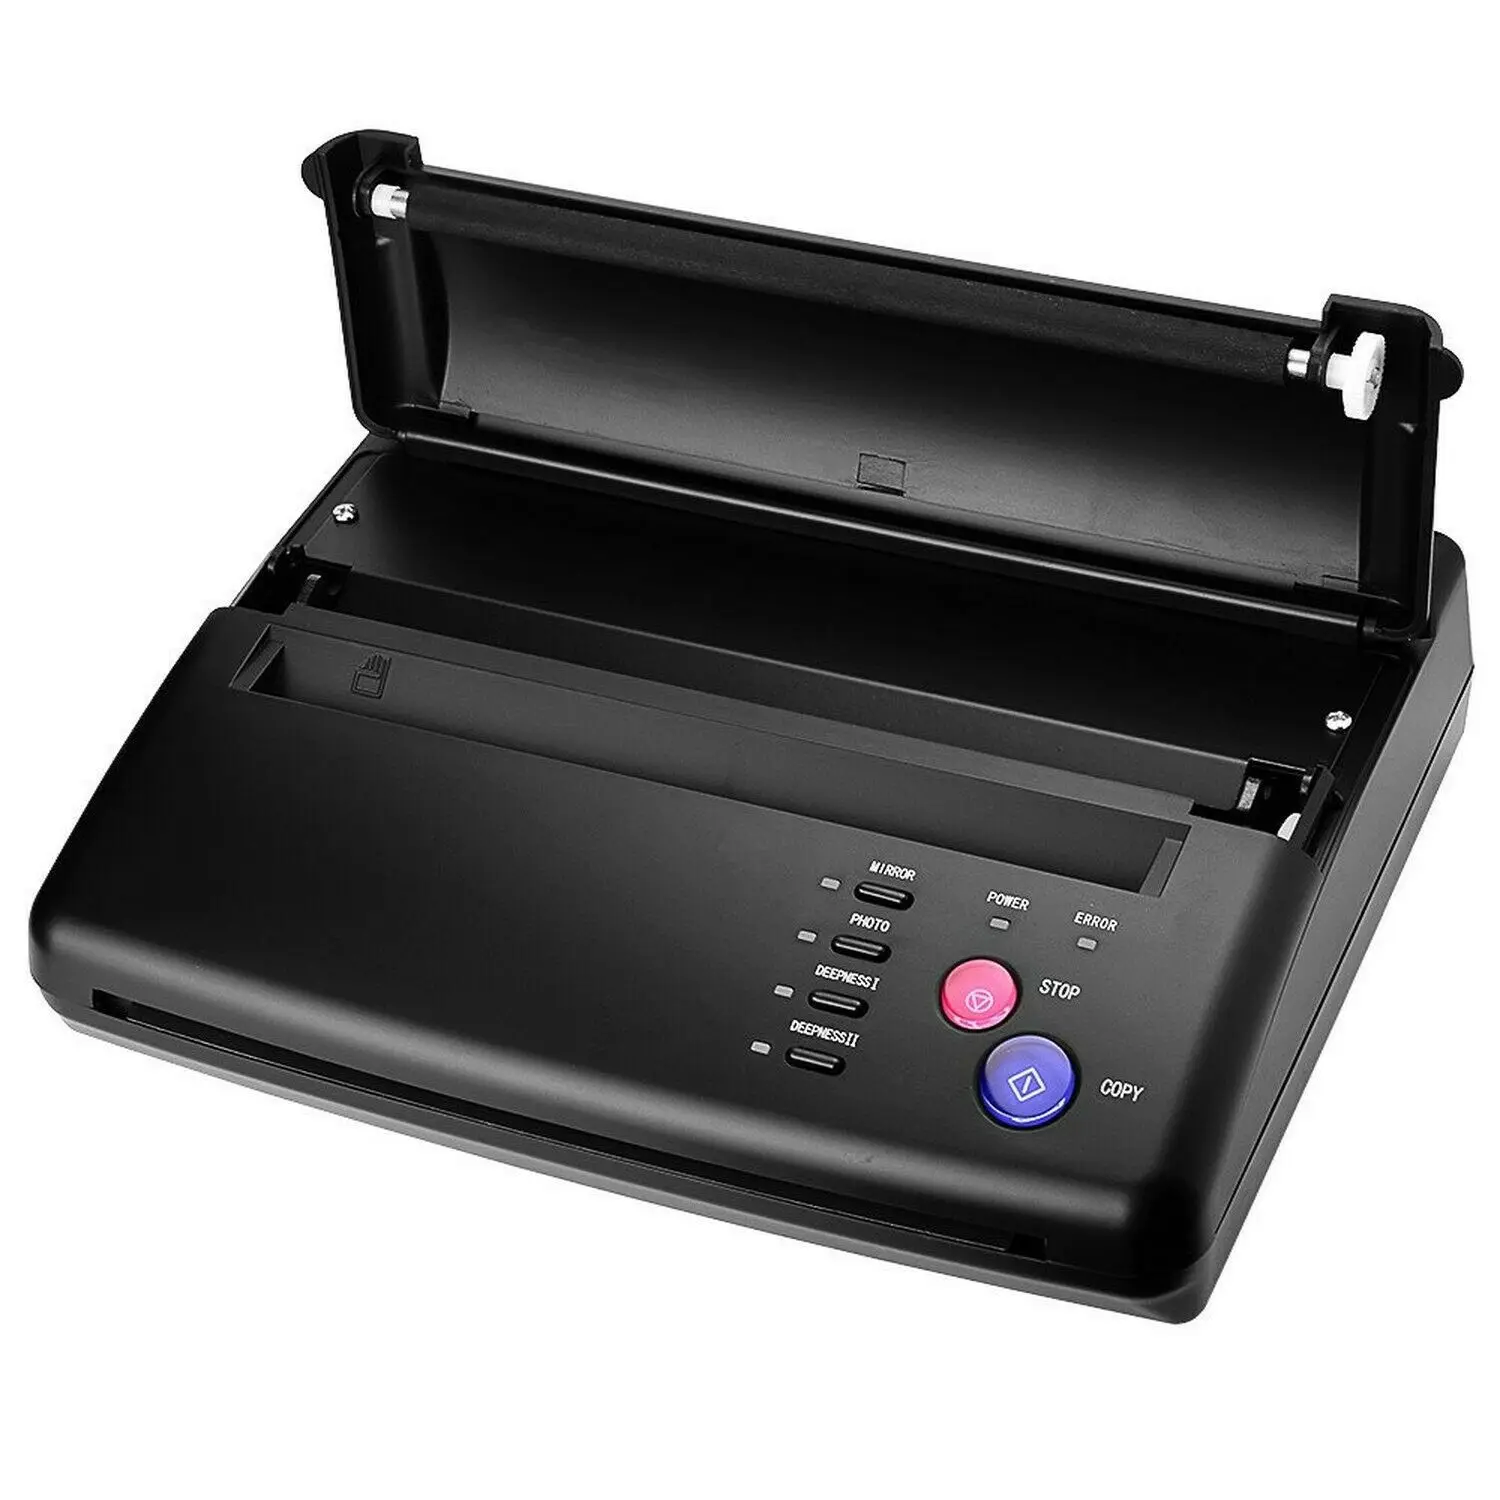 Lighter Tattoo Transfer Machine Stencil Printer Drawing Thermal